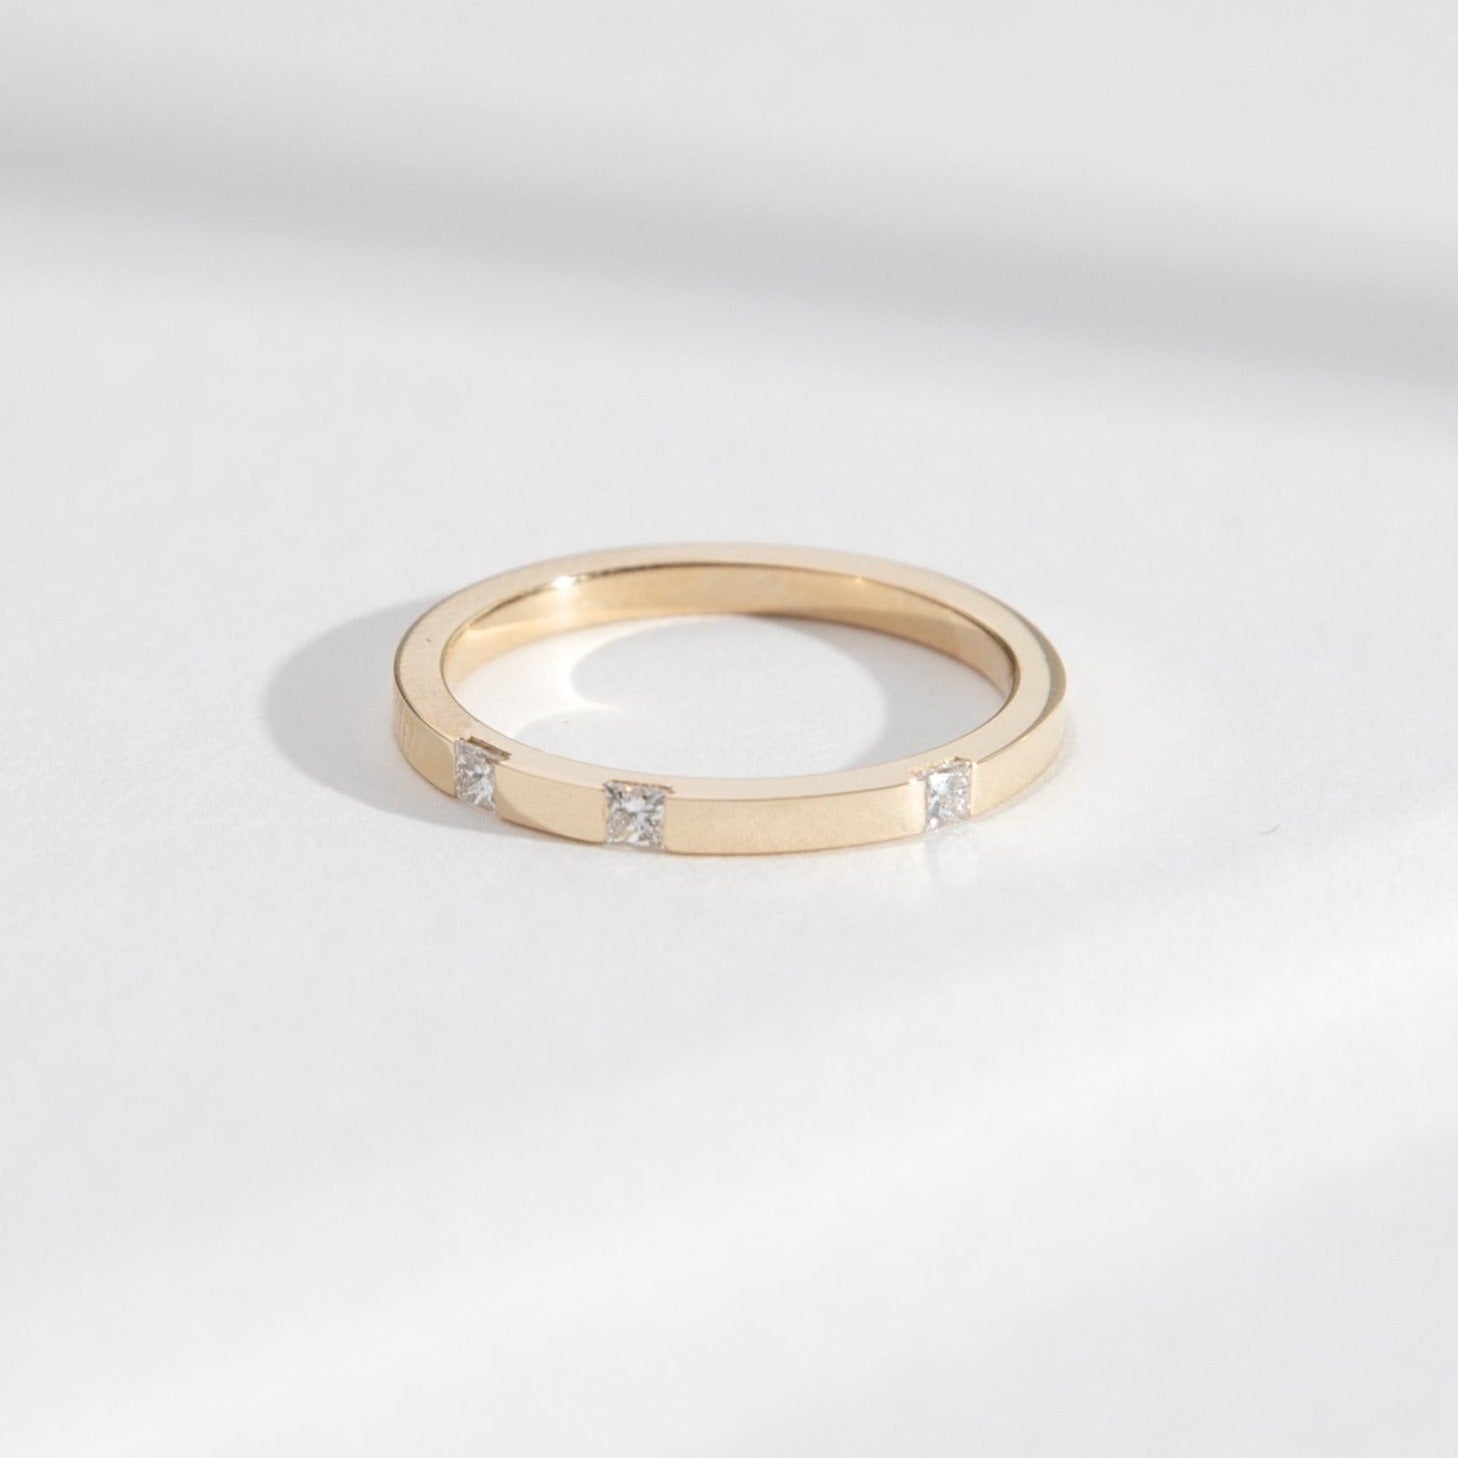 Erda Designer Ring in 14k Gold set with White Diamonds By SHW Fine Jewelry New York City